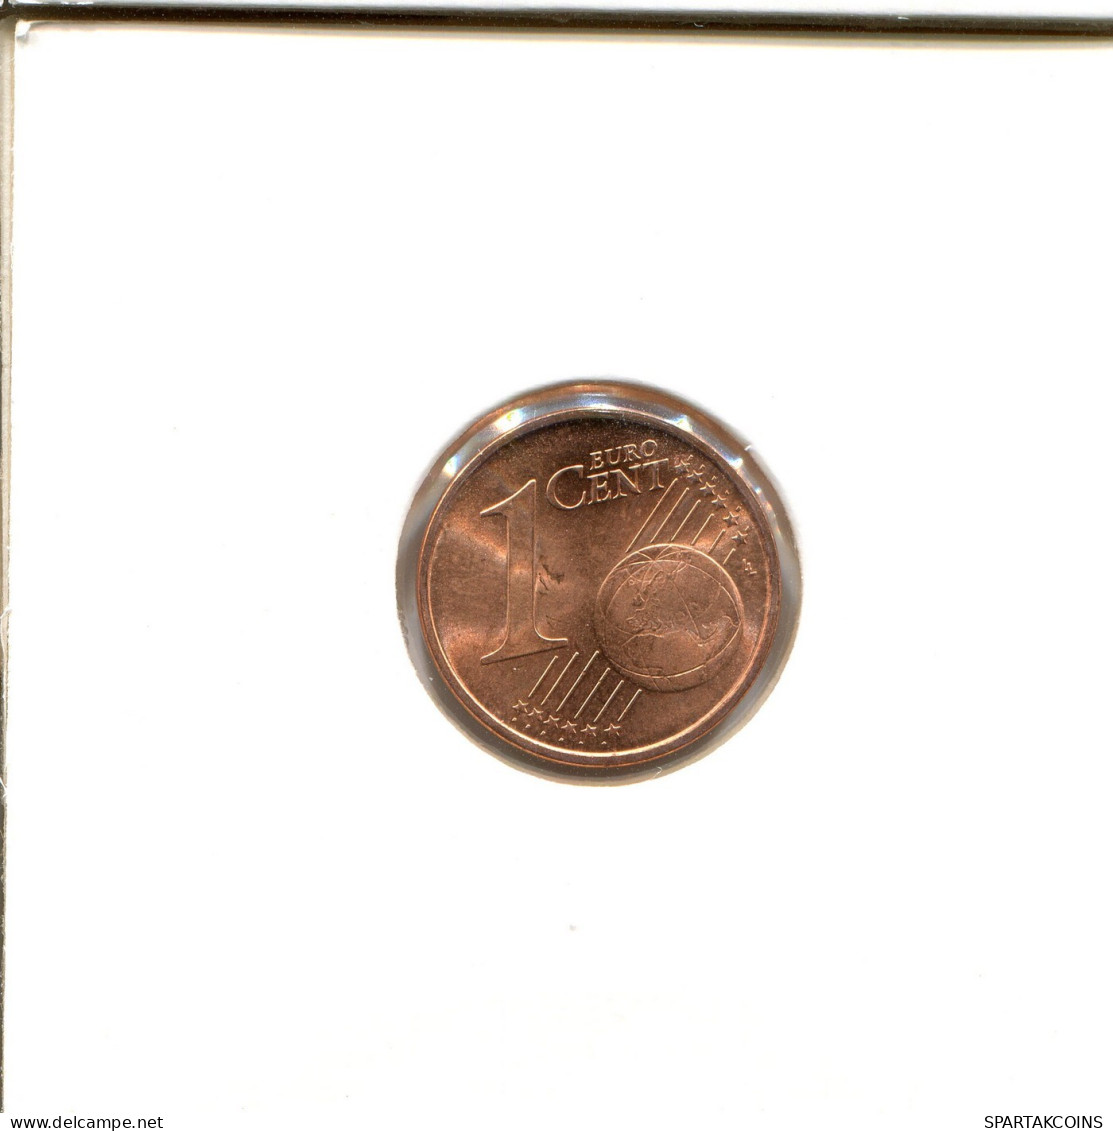 1 EURO CENT 2013 ALEMANIA Moneda GERMANY #EU136.E.A - Germany